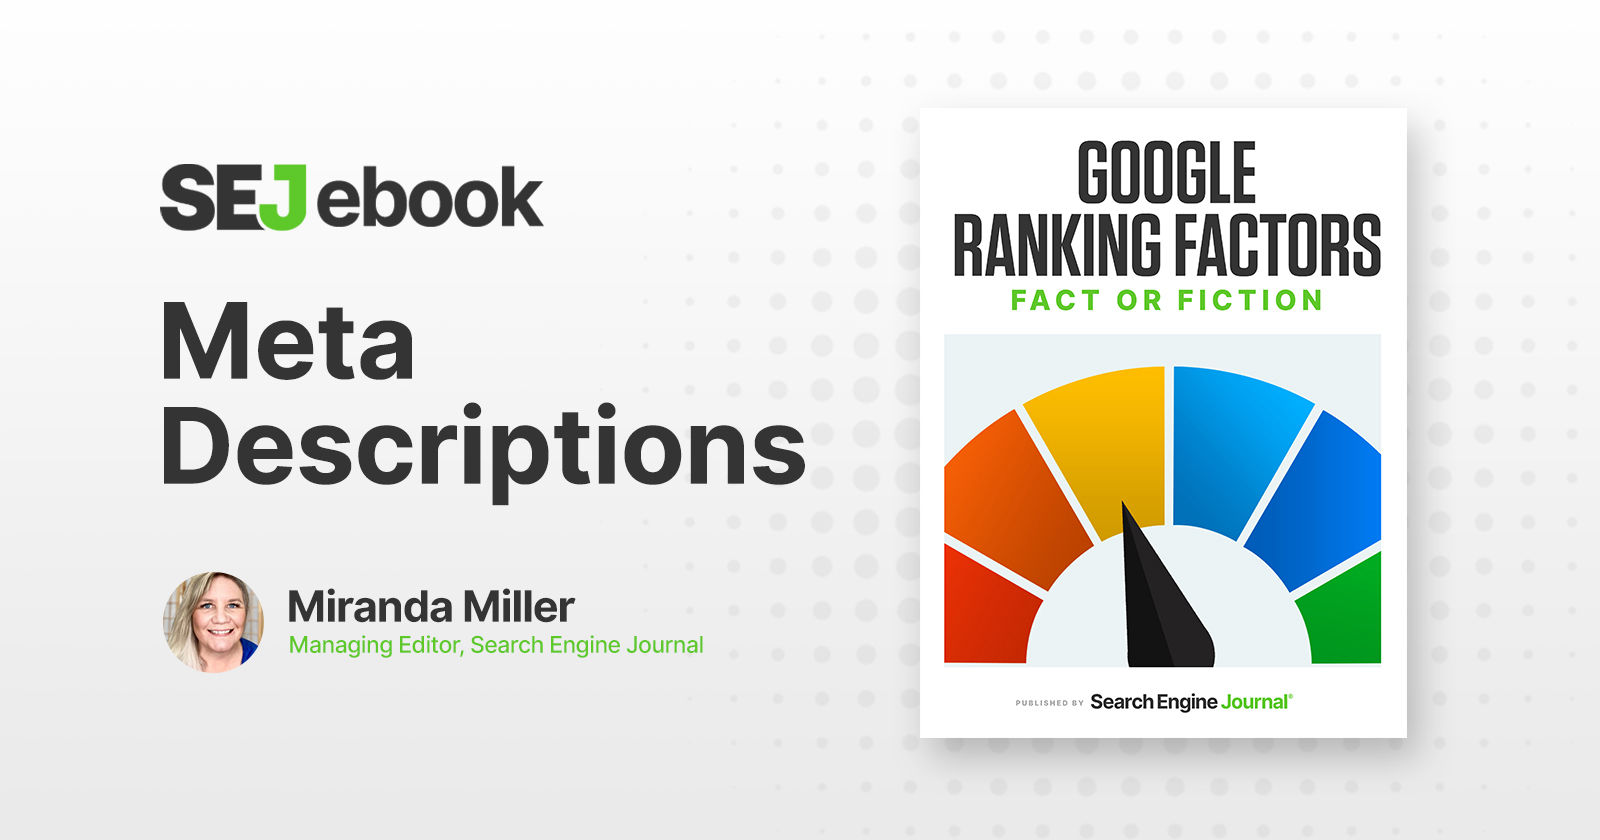 Are Meta Descriptions A Google Ranking Factor? via @sejournal, @mirandalmwrites